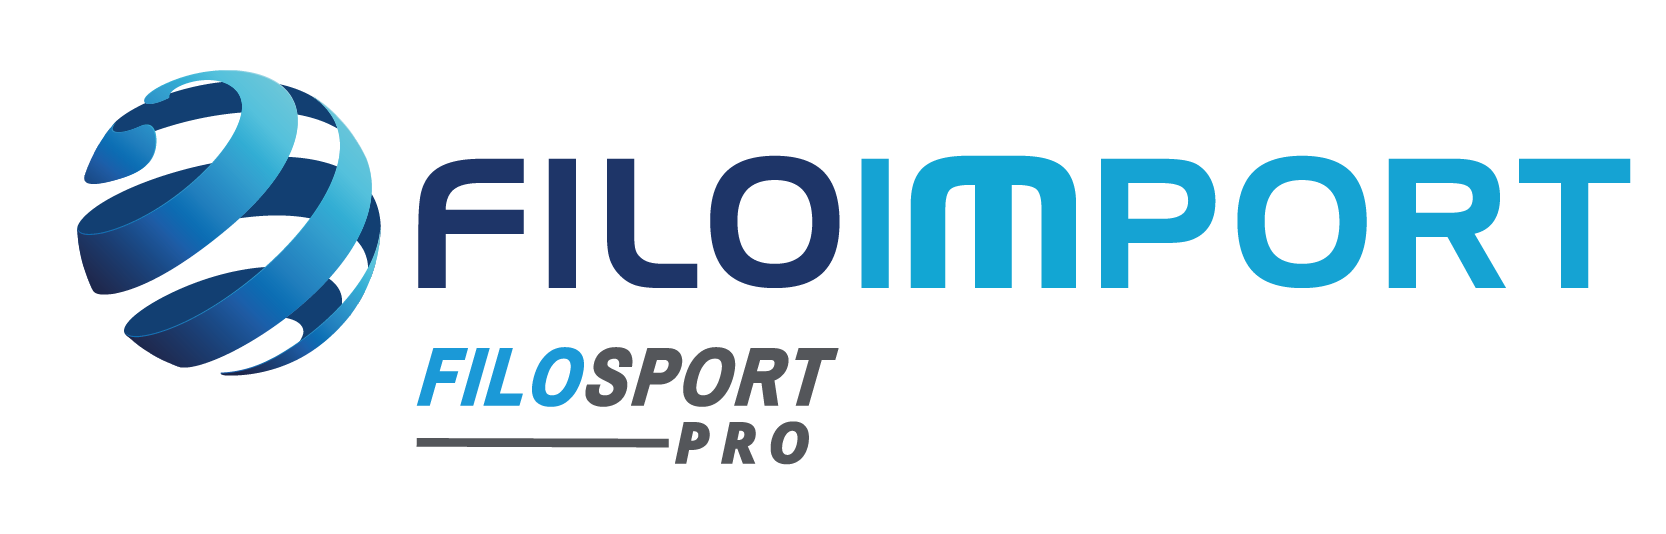 Filoimport Filosportpro Logo 2